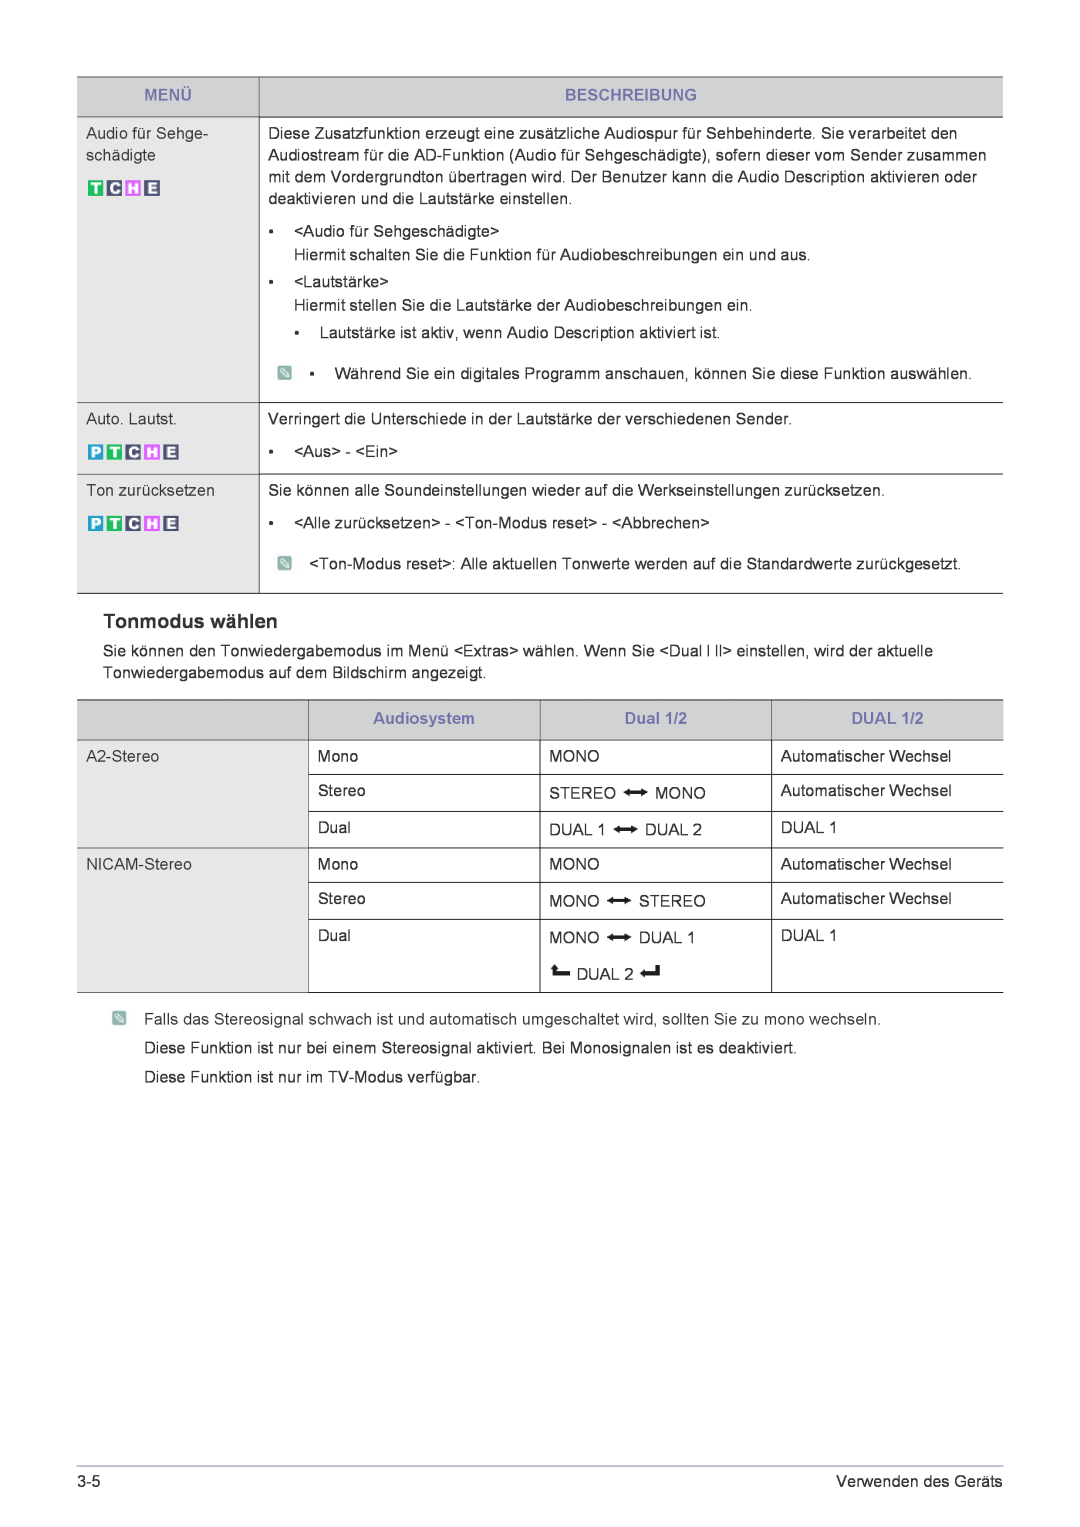 Samsung LS22FMDGF/EN manual Tonmodus wählen, Audiosystem, Dual 1/2, DUAL 1/2, Menü, Beschreibung 